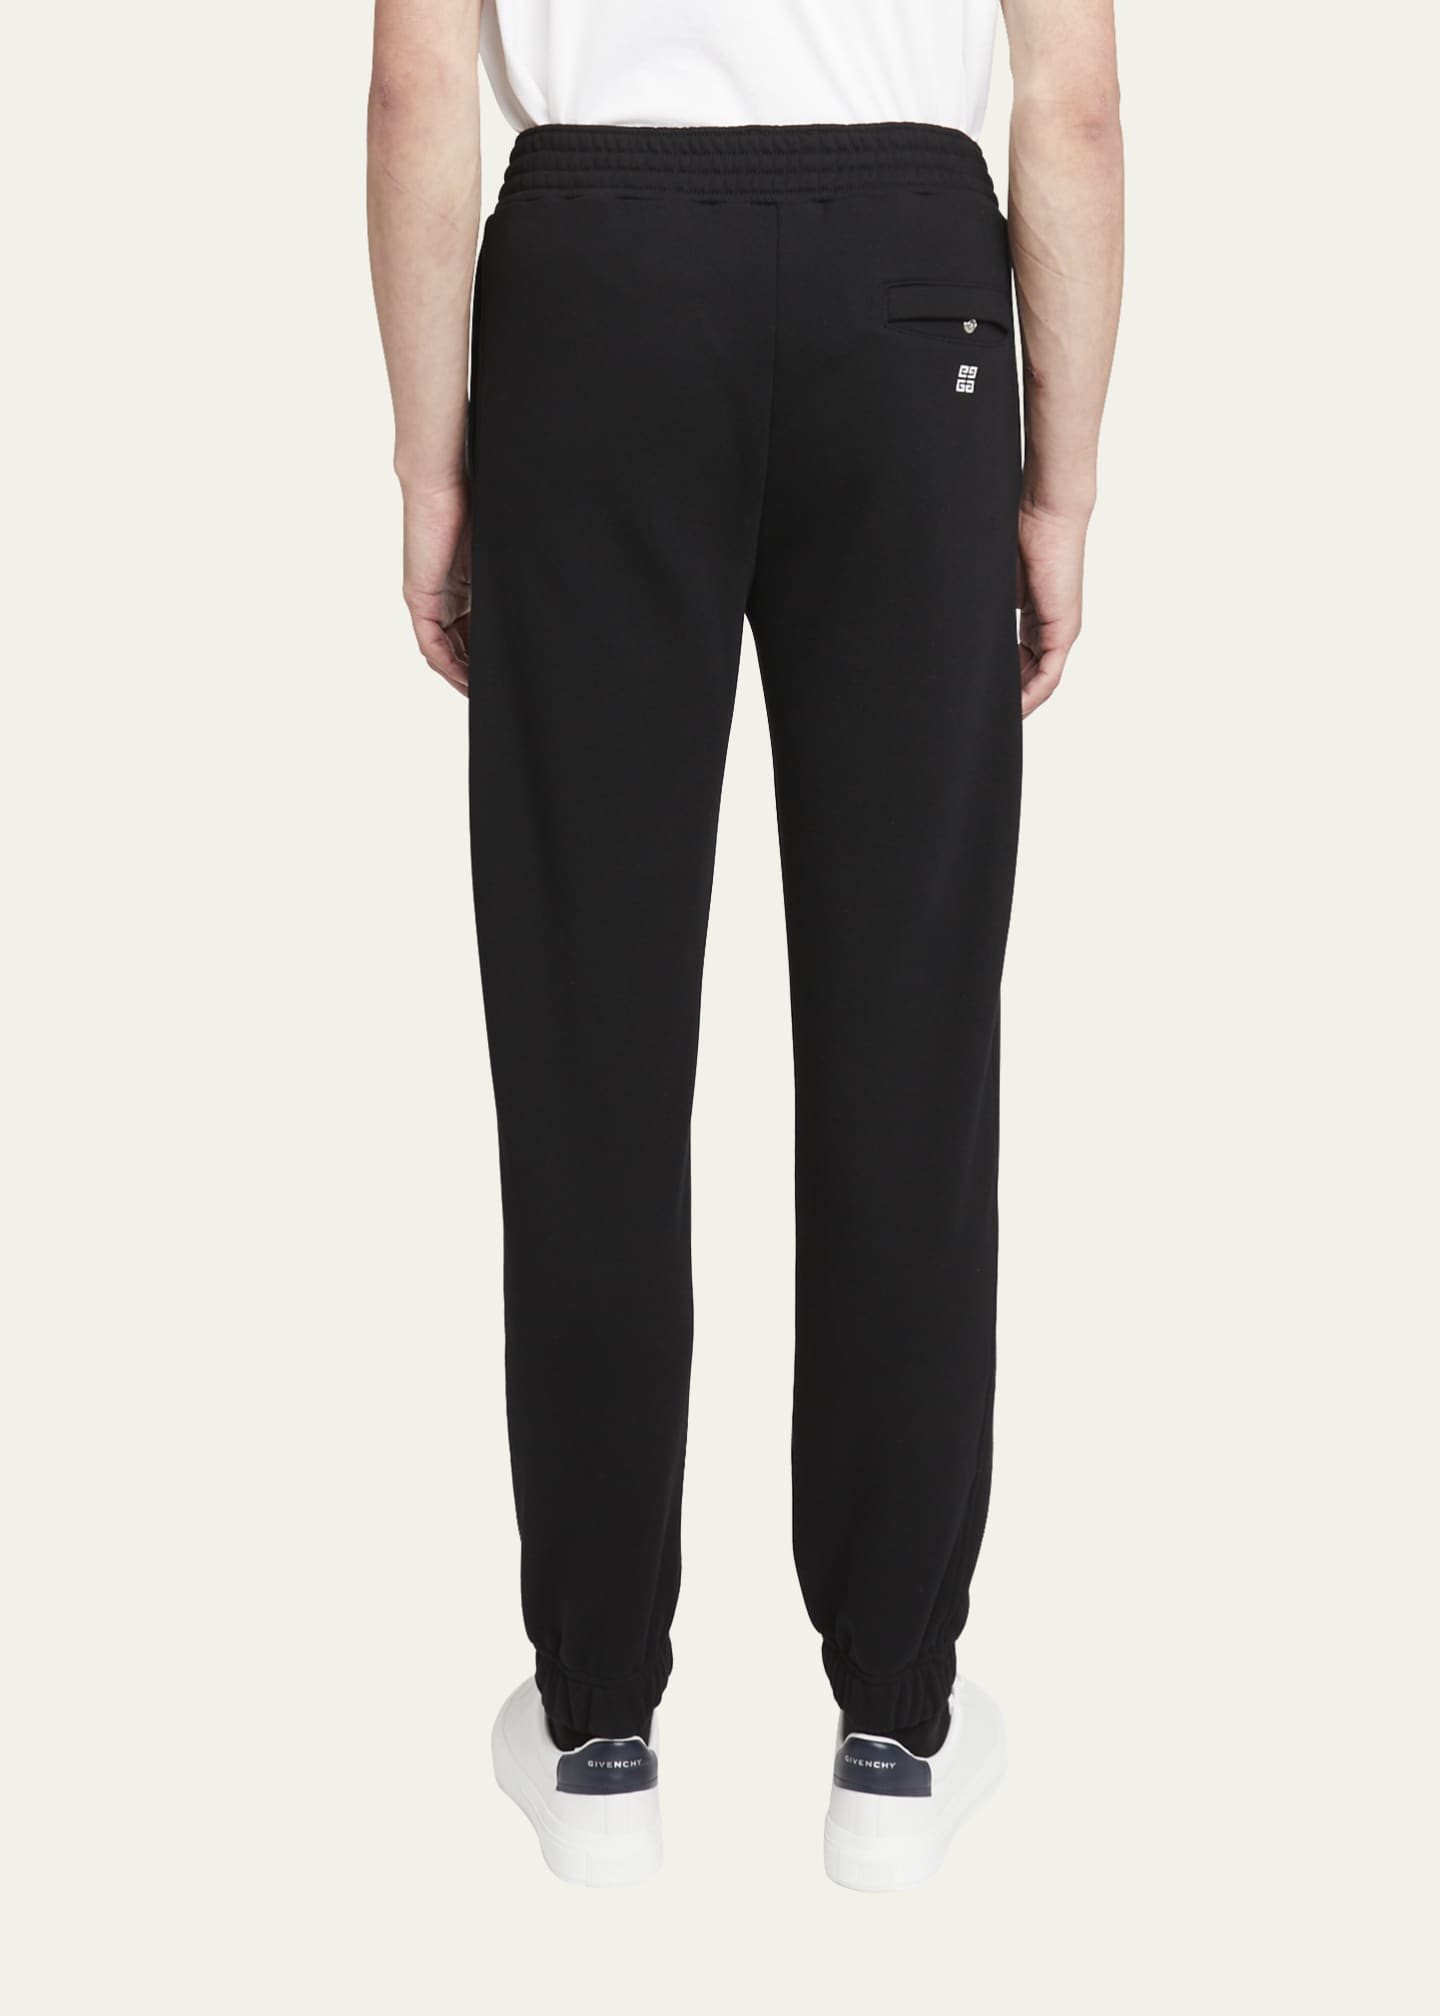 Givenchy Men's Large Logo Basic Felpa Jogger Pants